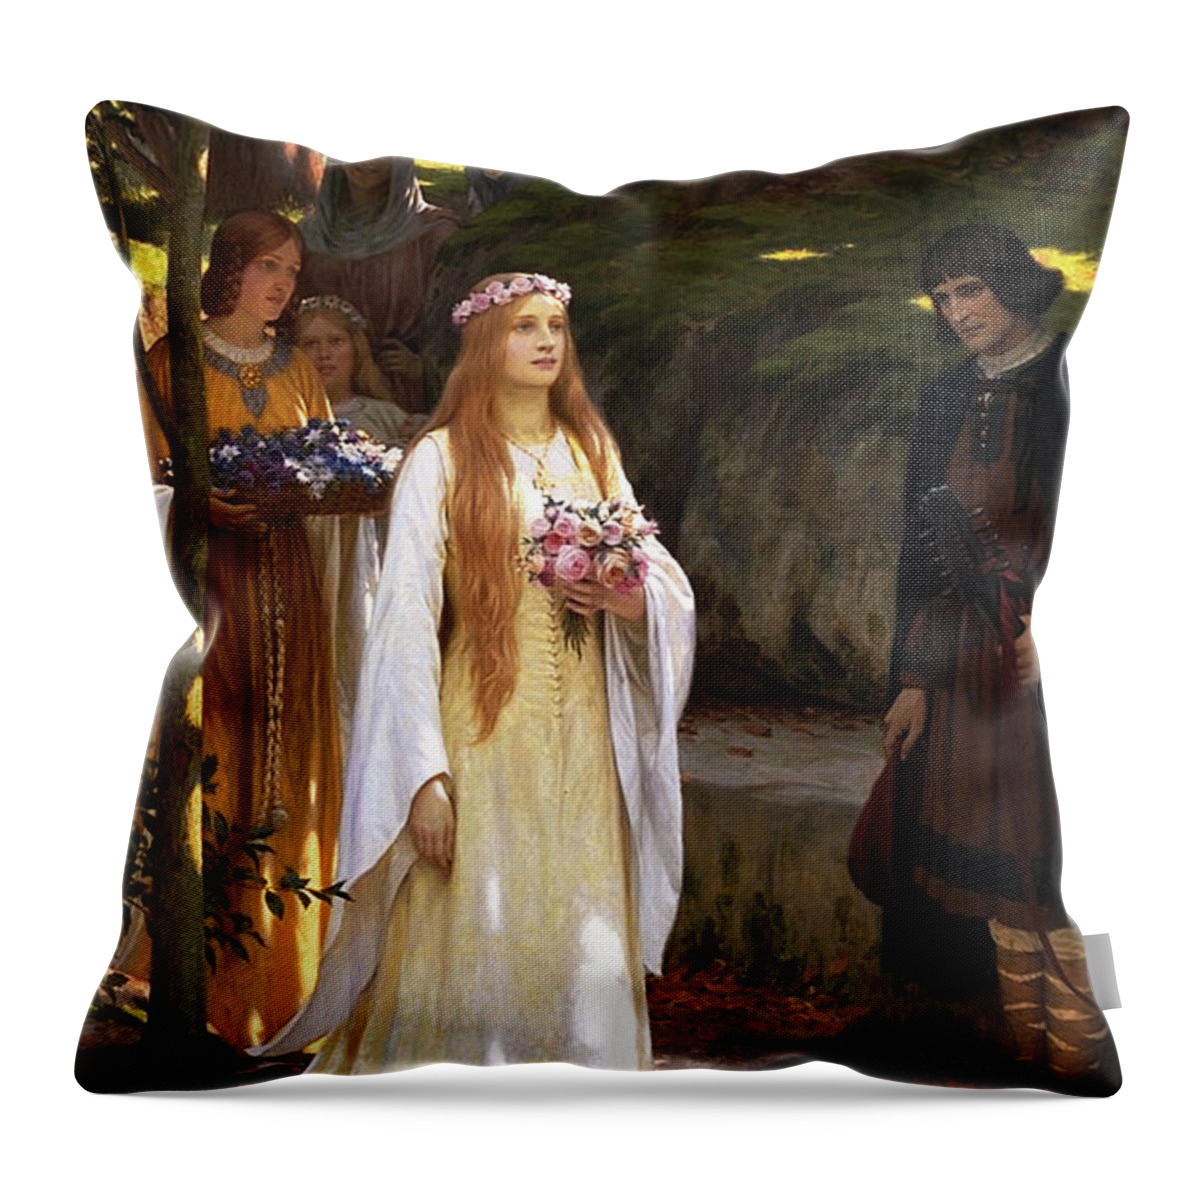 My Fair Lady Throw Pillow featuring the painting My Fair Lady by Edmund Leighton by Rolando Burbon